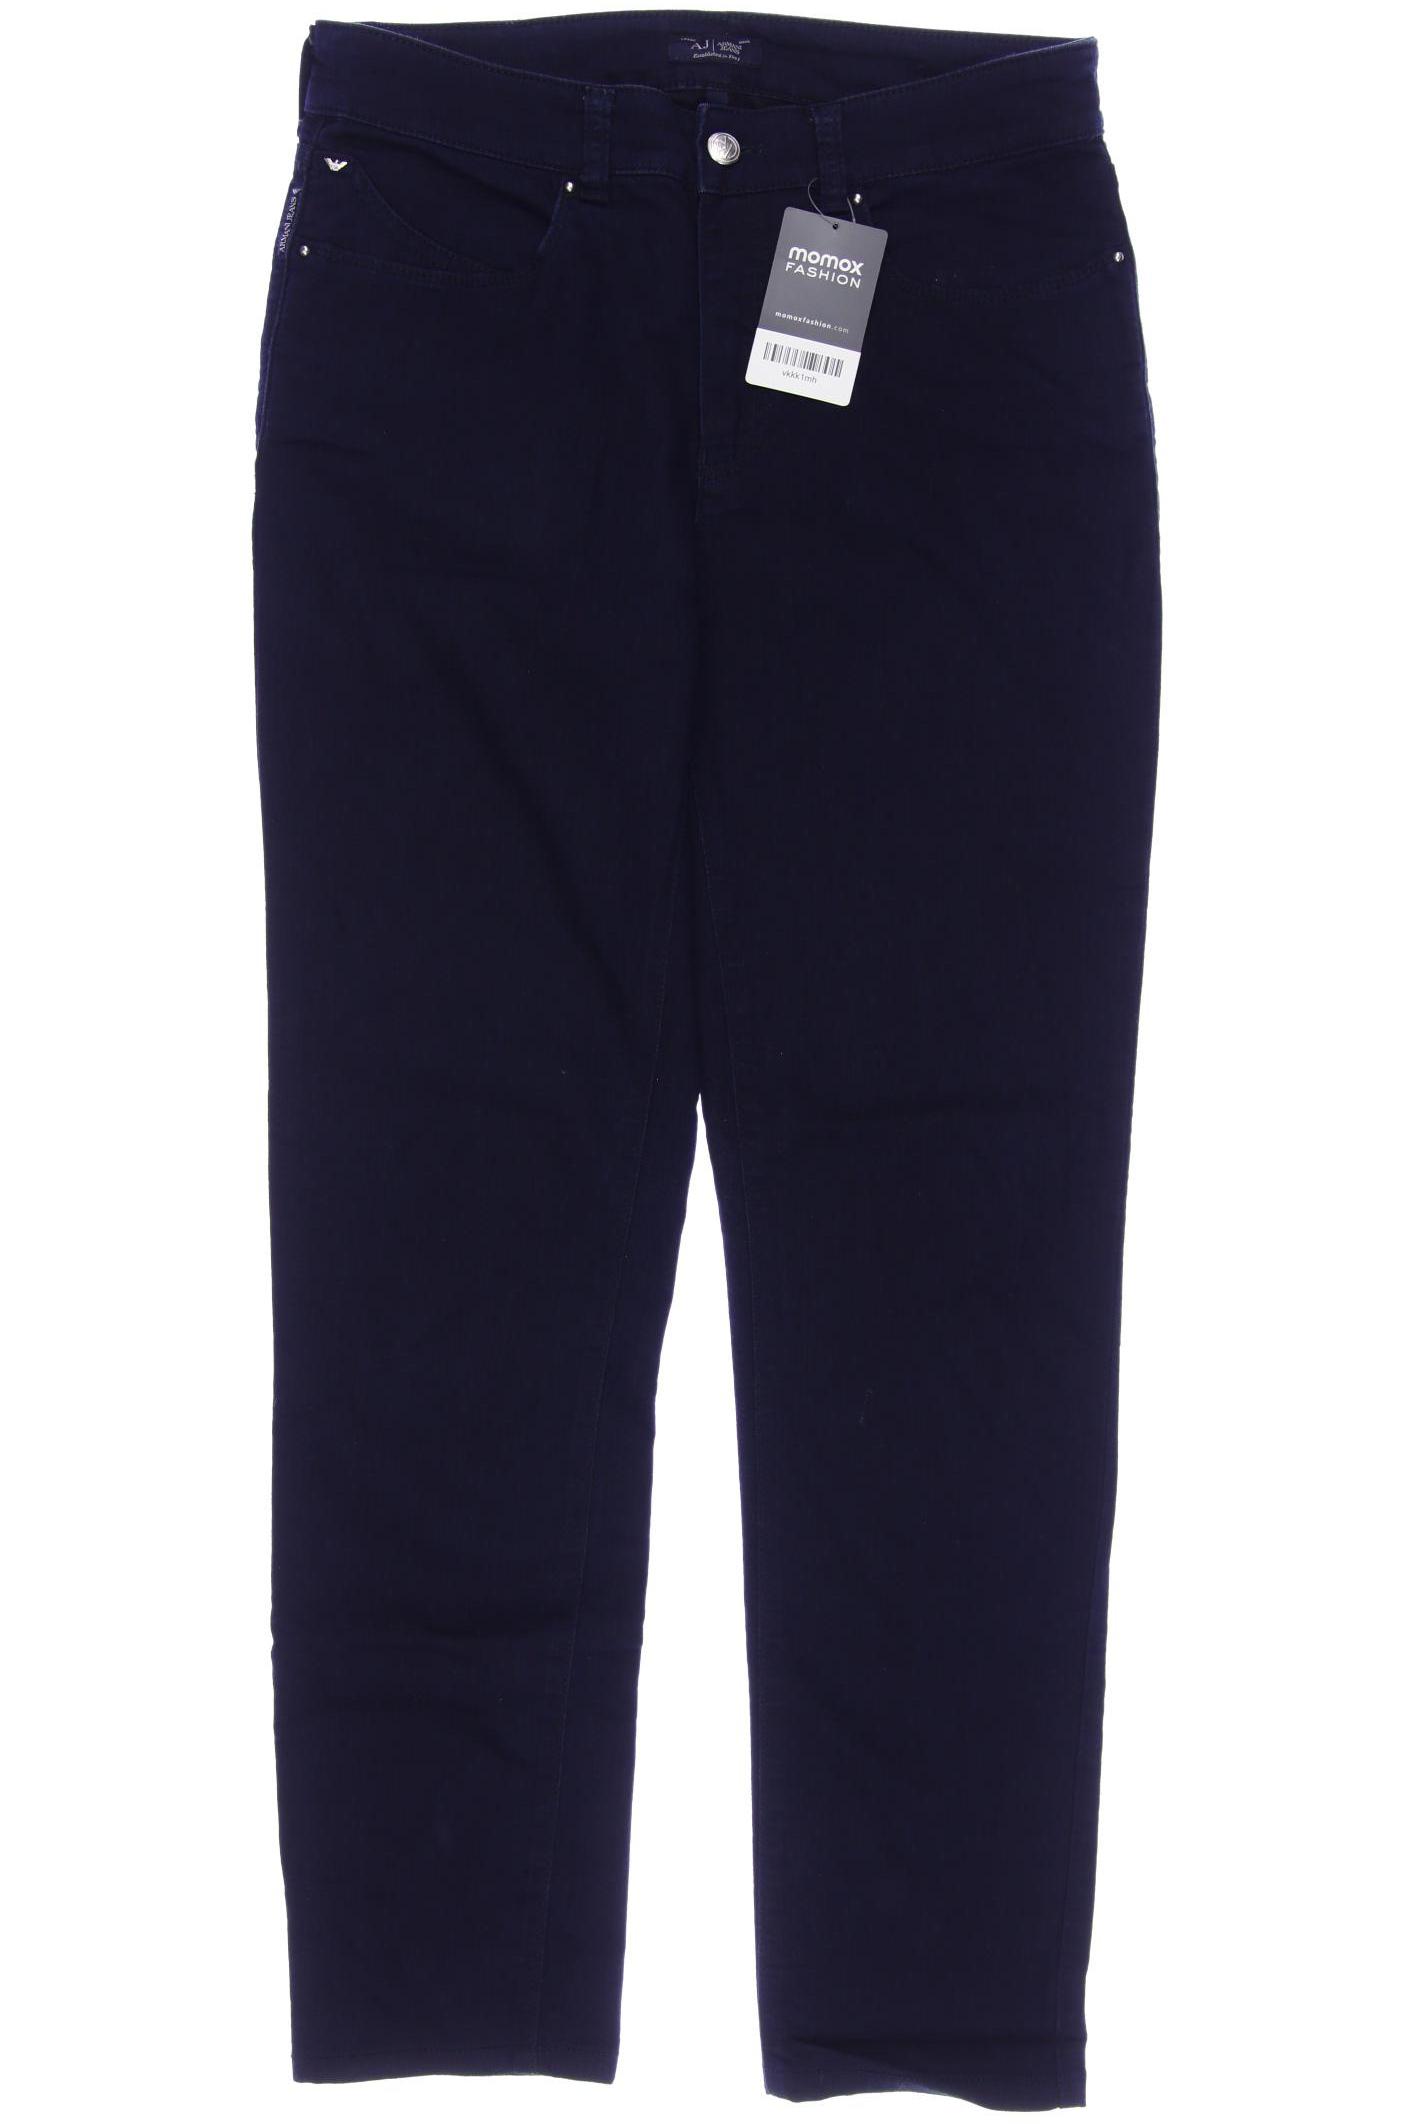 Armani Jeans Damen Stoffhose, marineblau von Armani Jeans